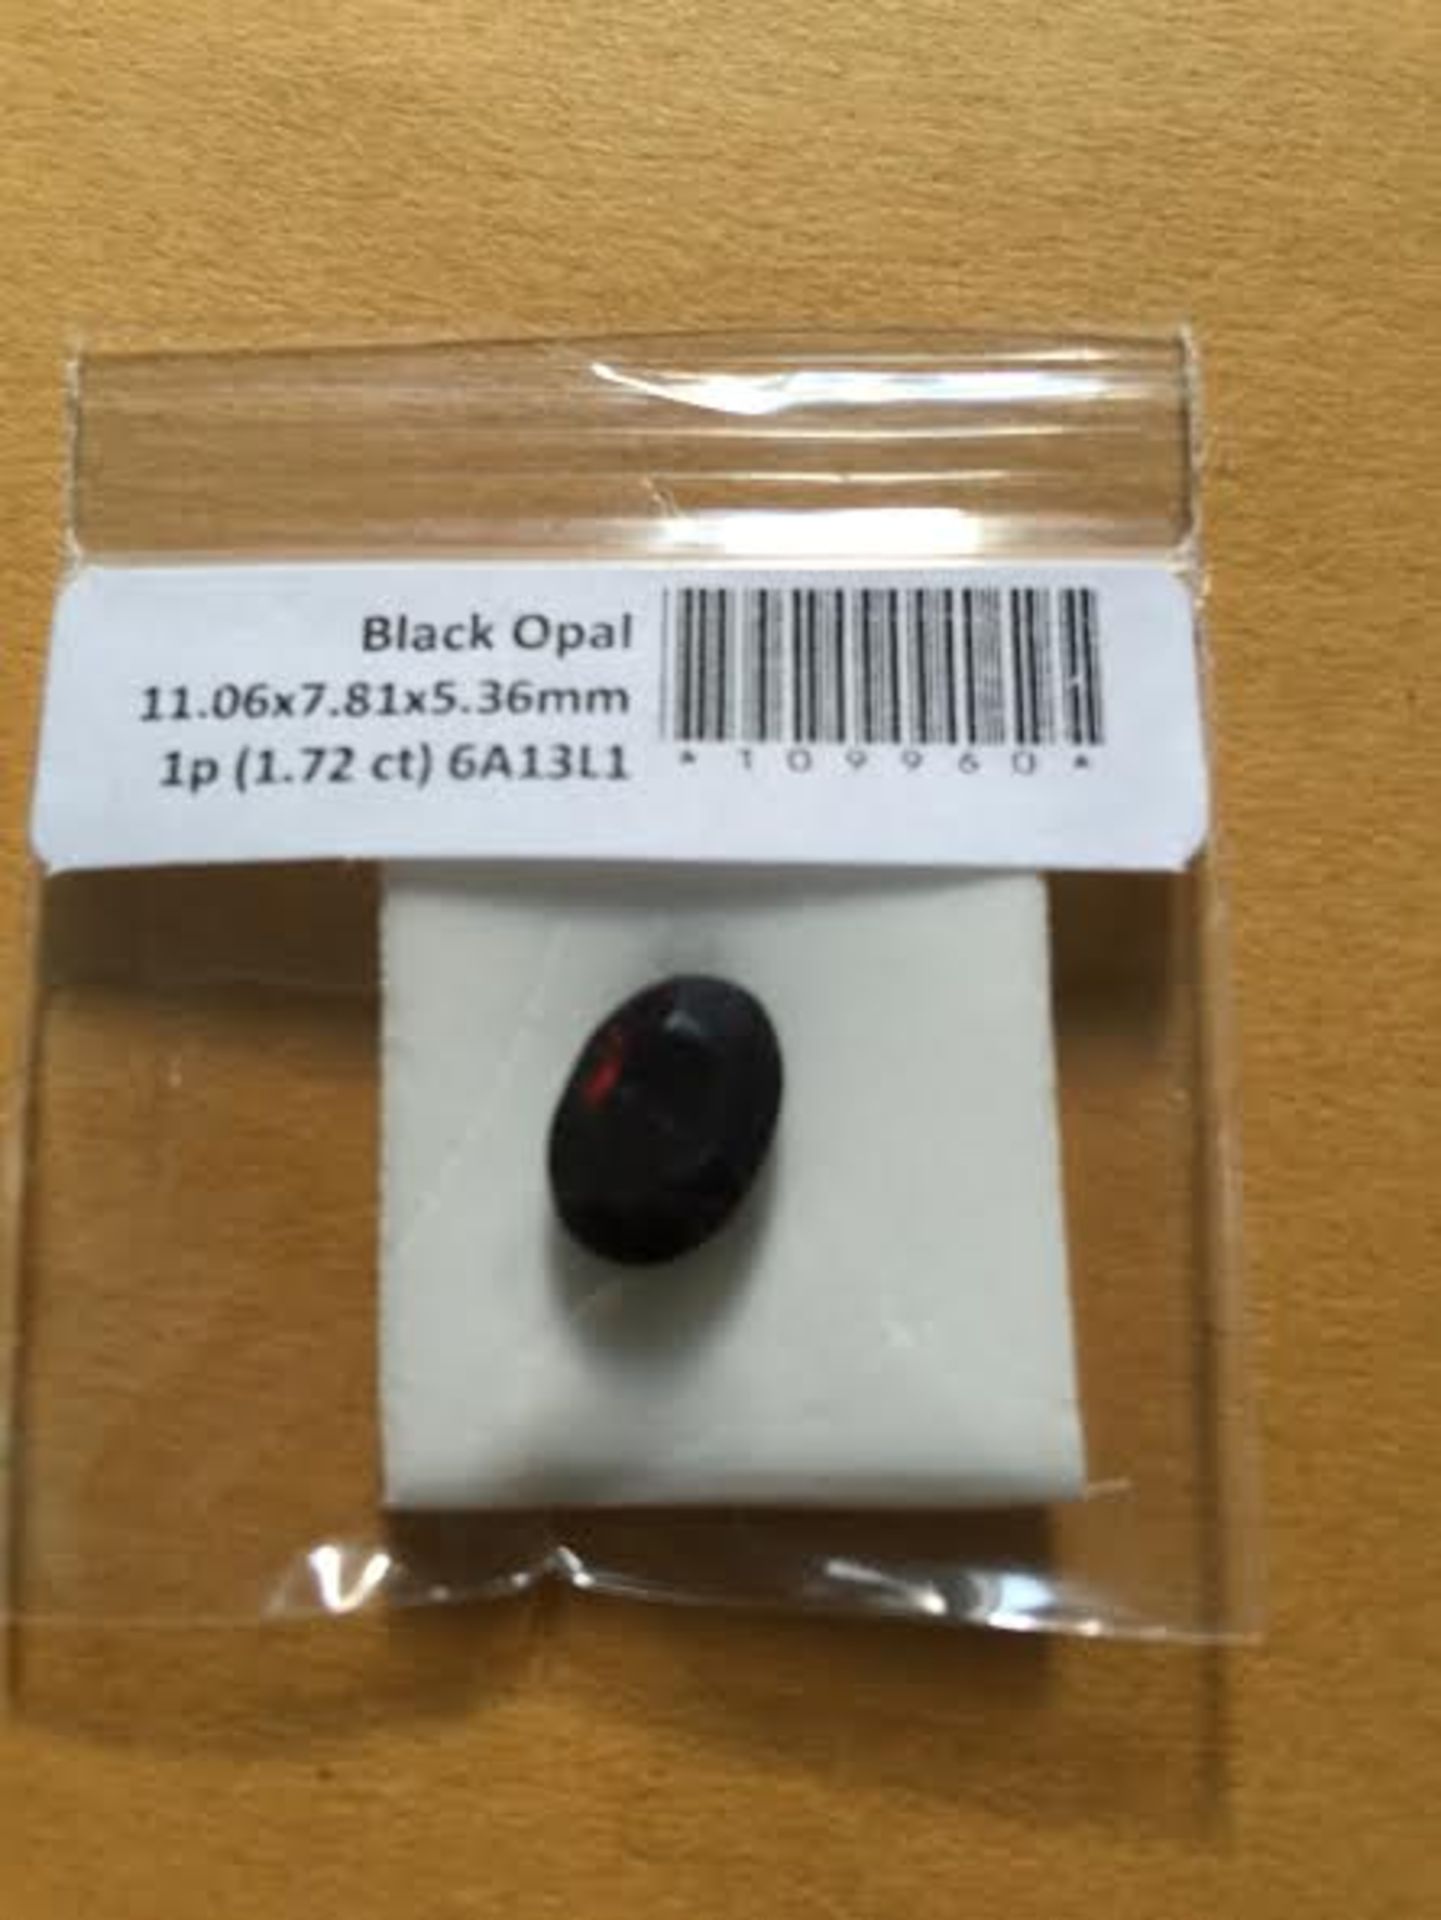 1.72 ct natural black opal